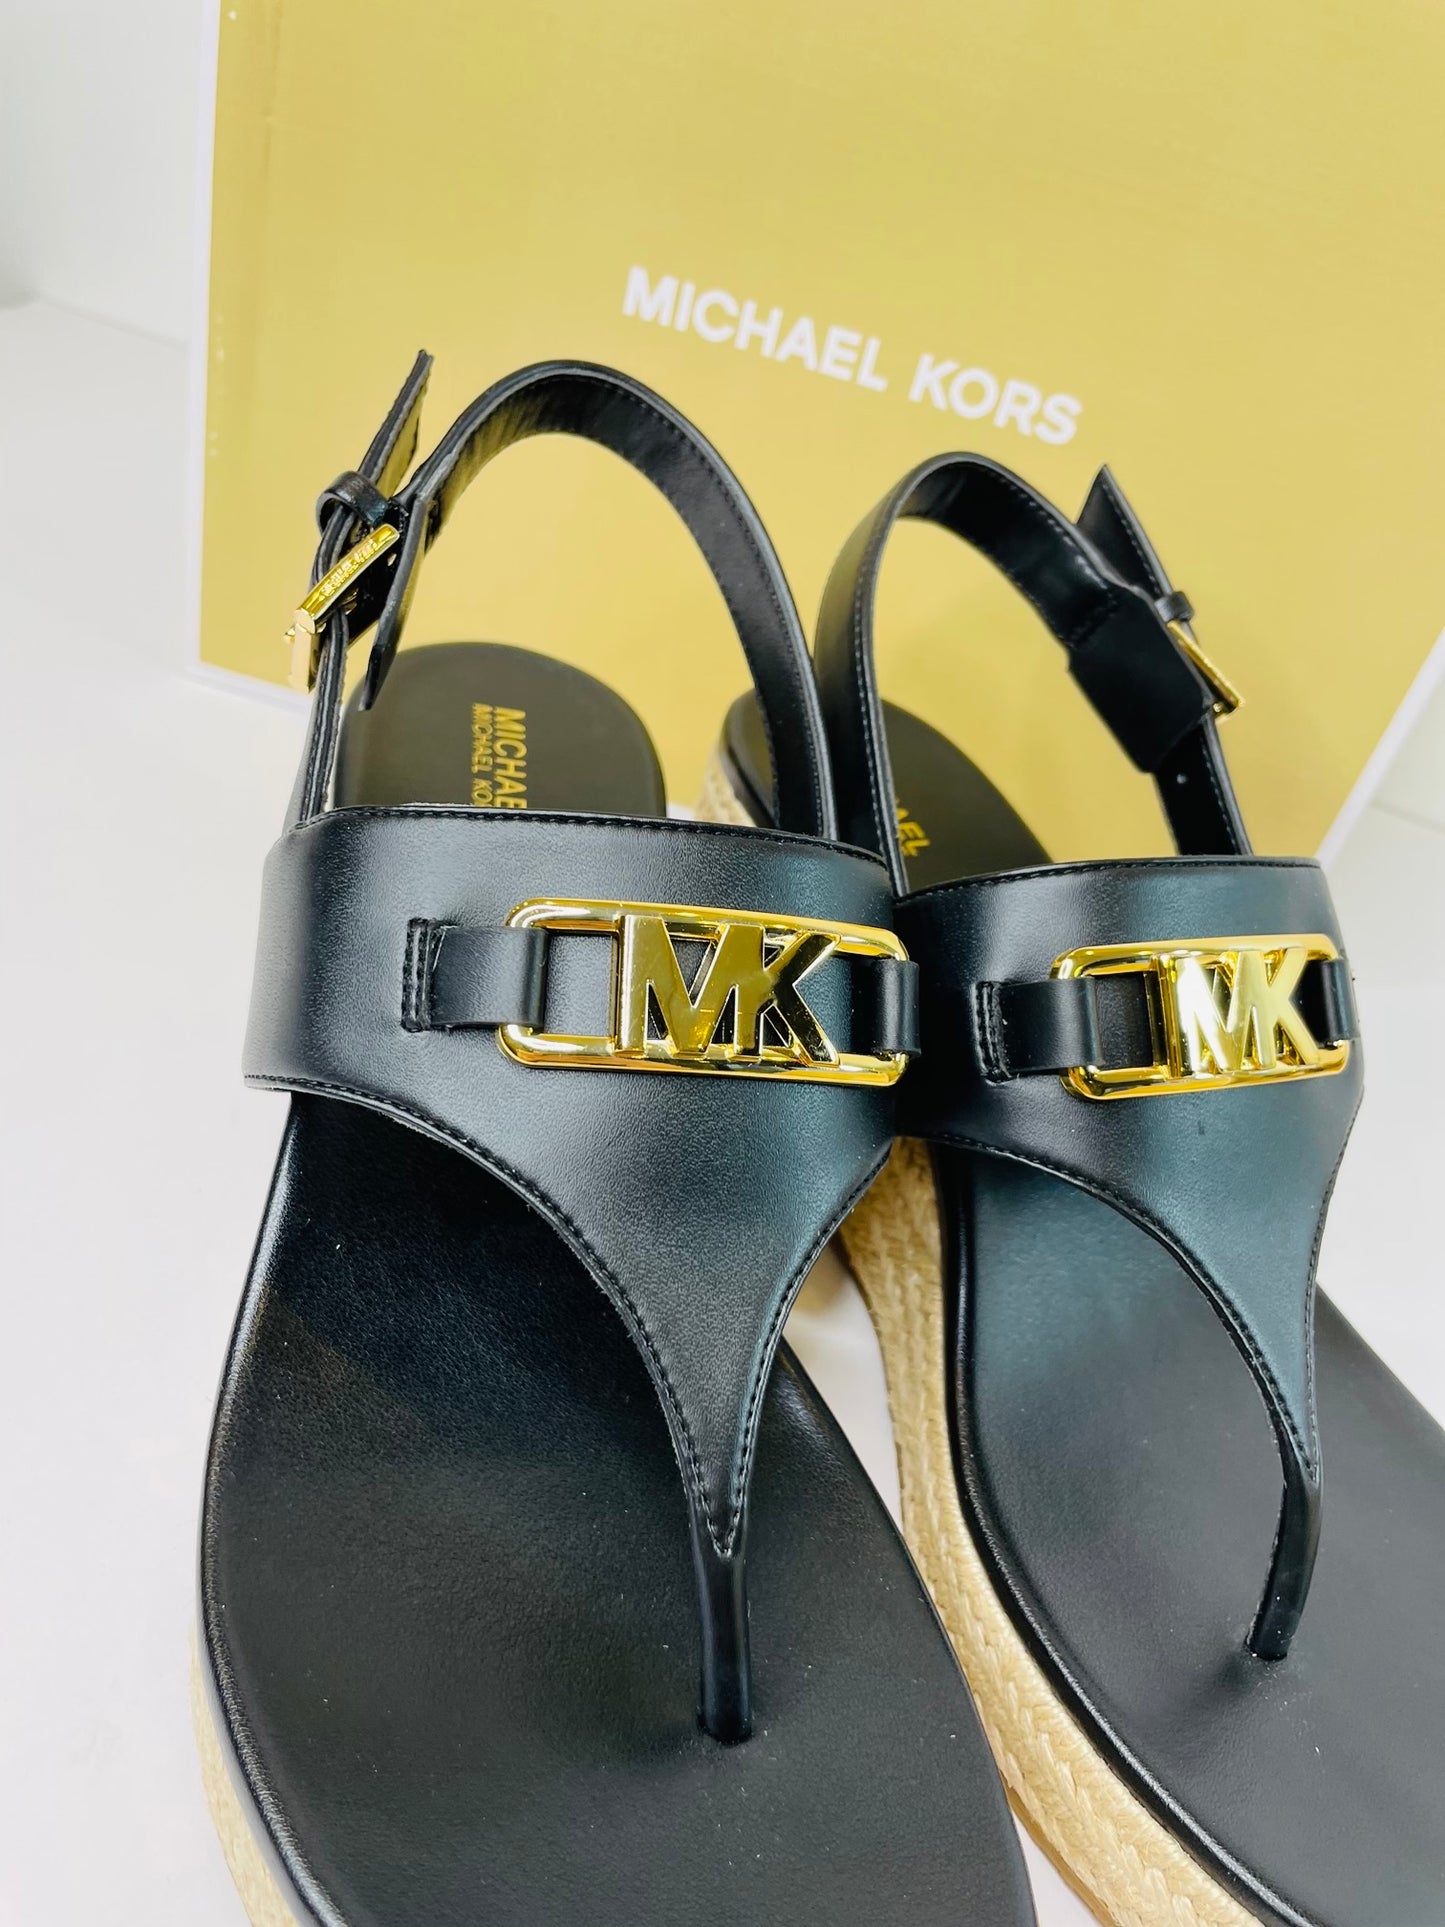 Michael kors sandal